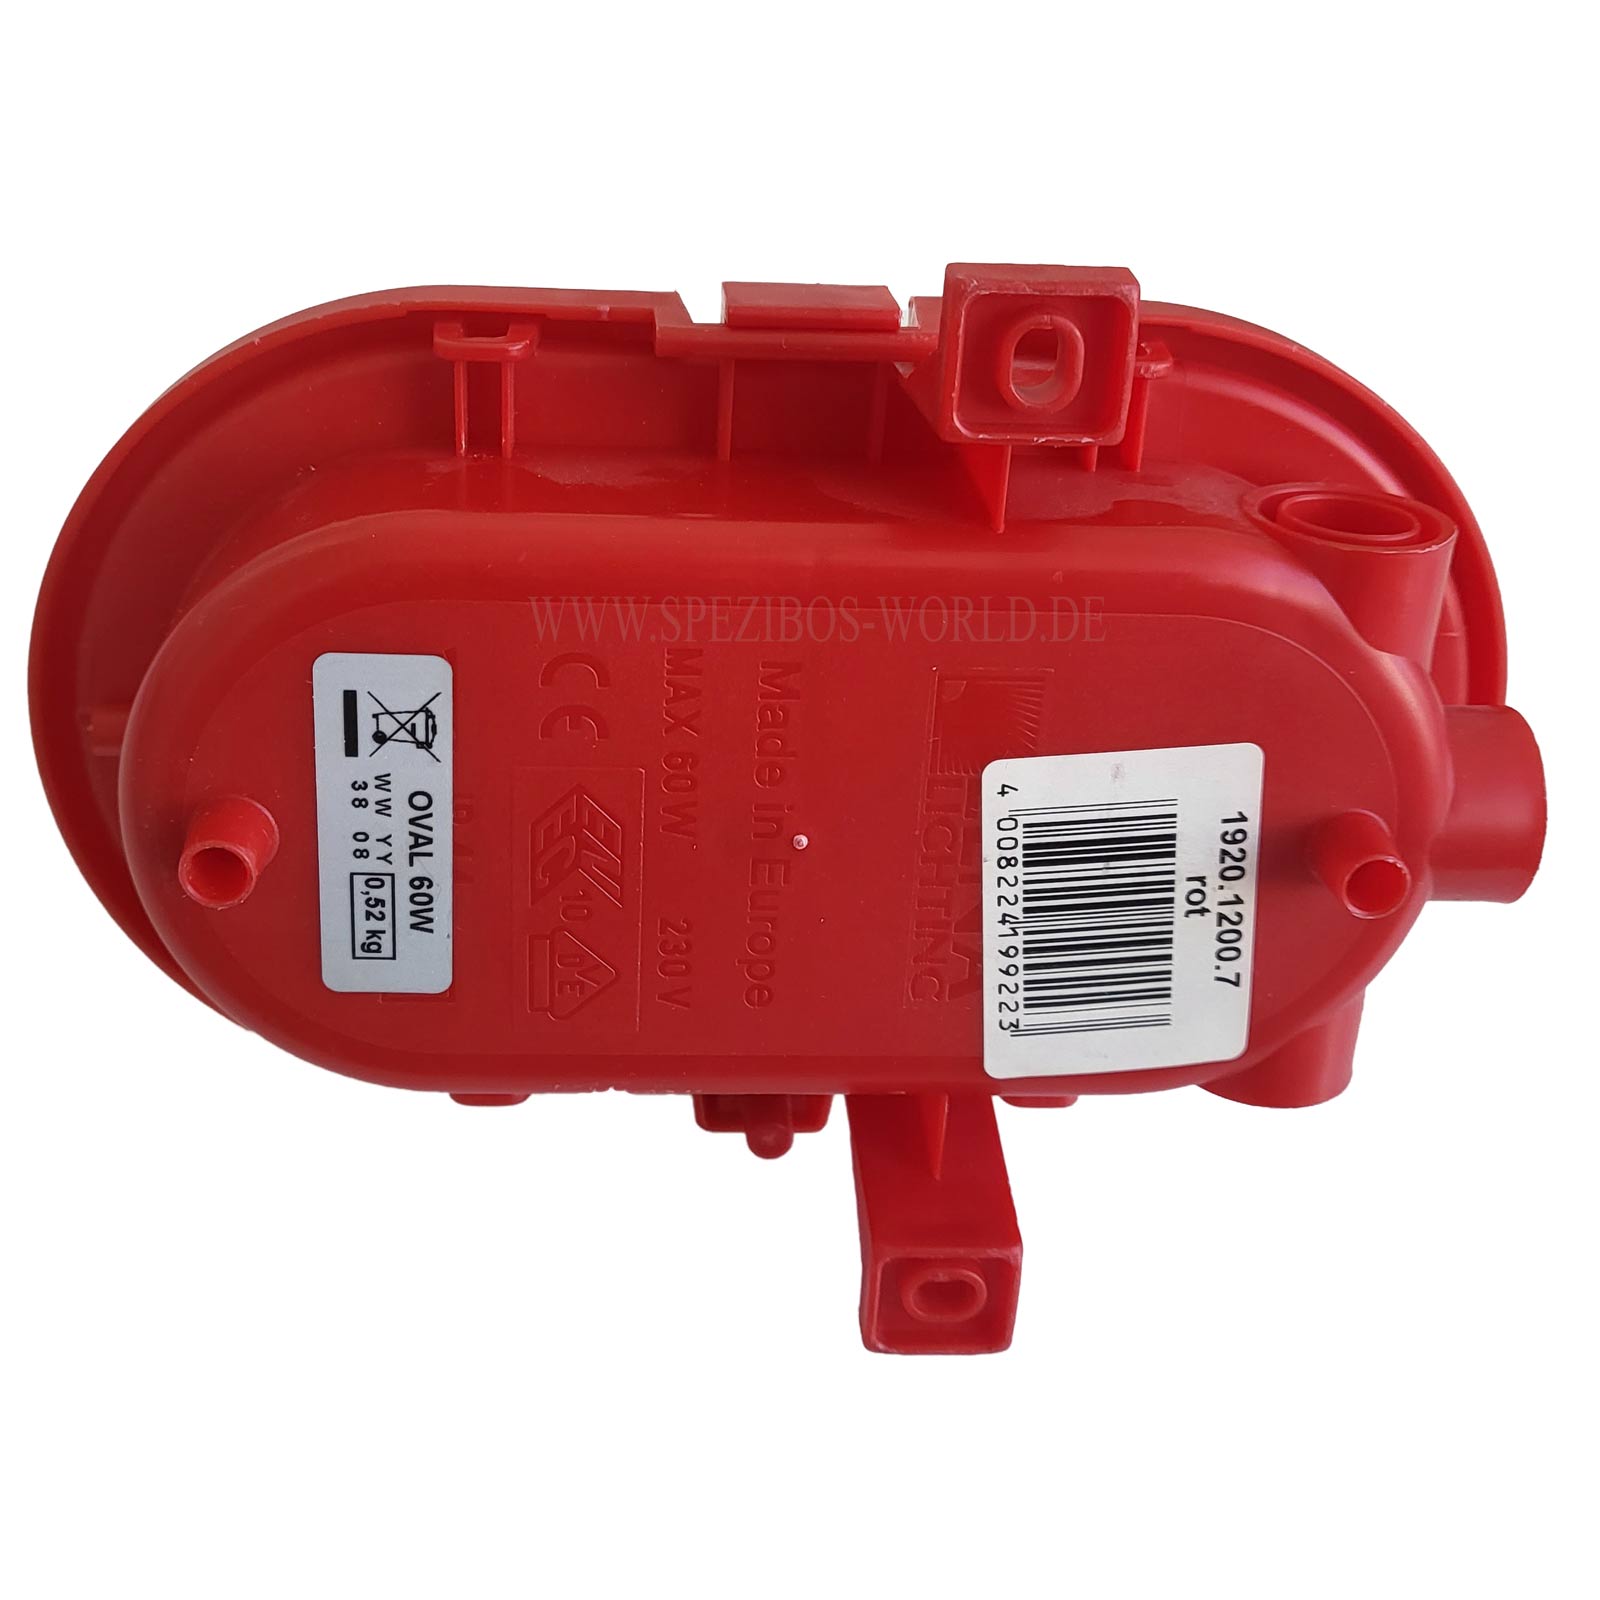 Spezibos-world Ovalarmatur E27 rot Kopp Fassung , Kellerlampe